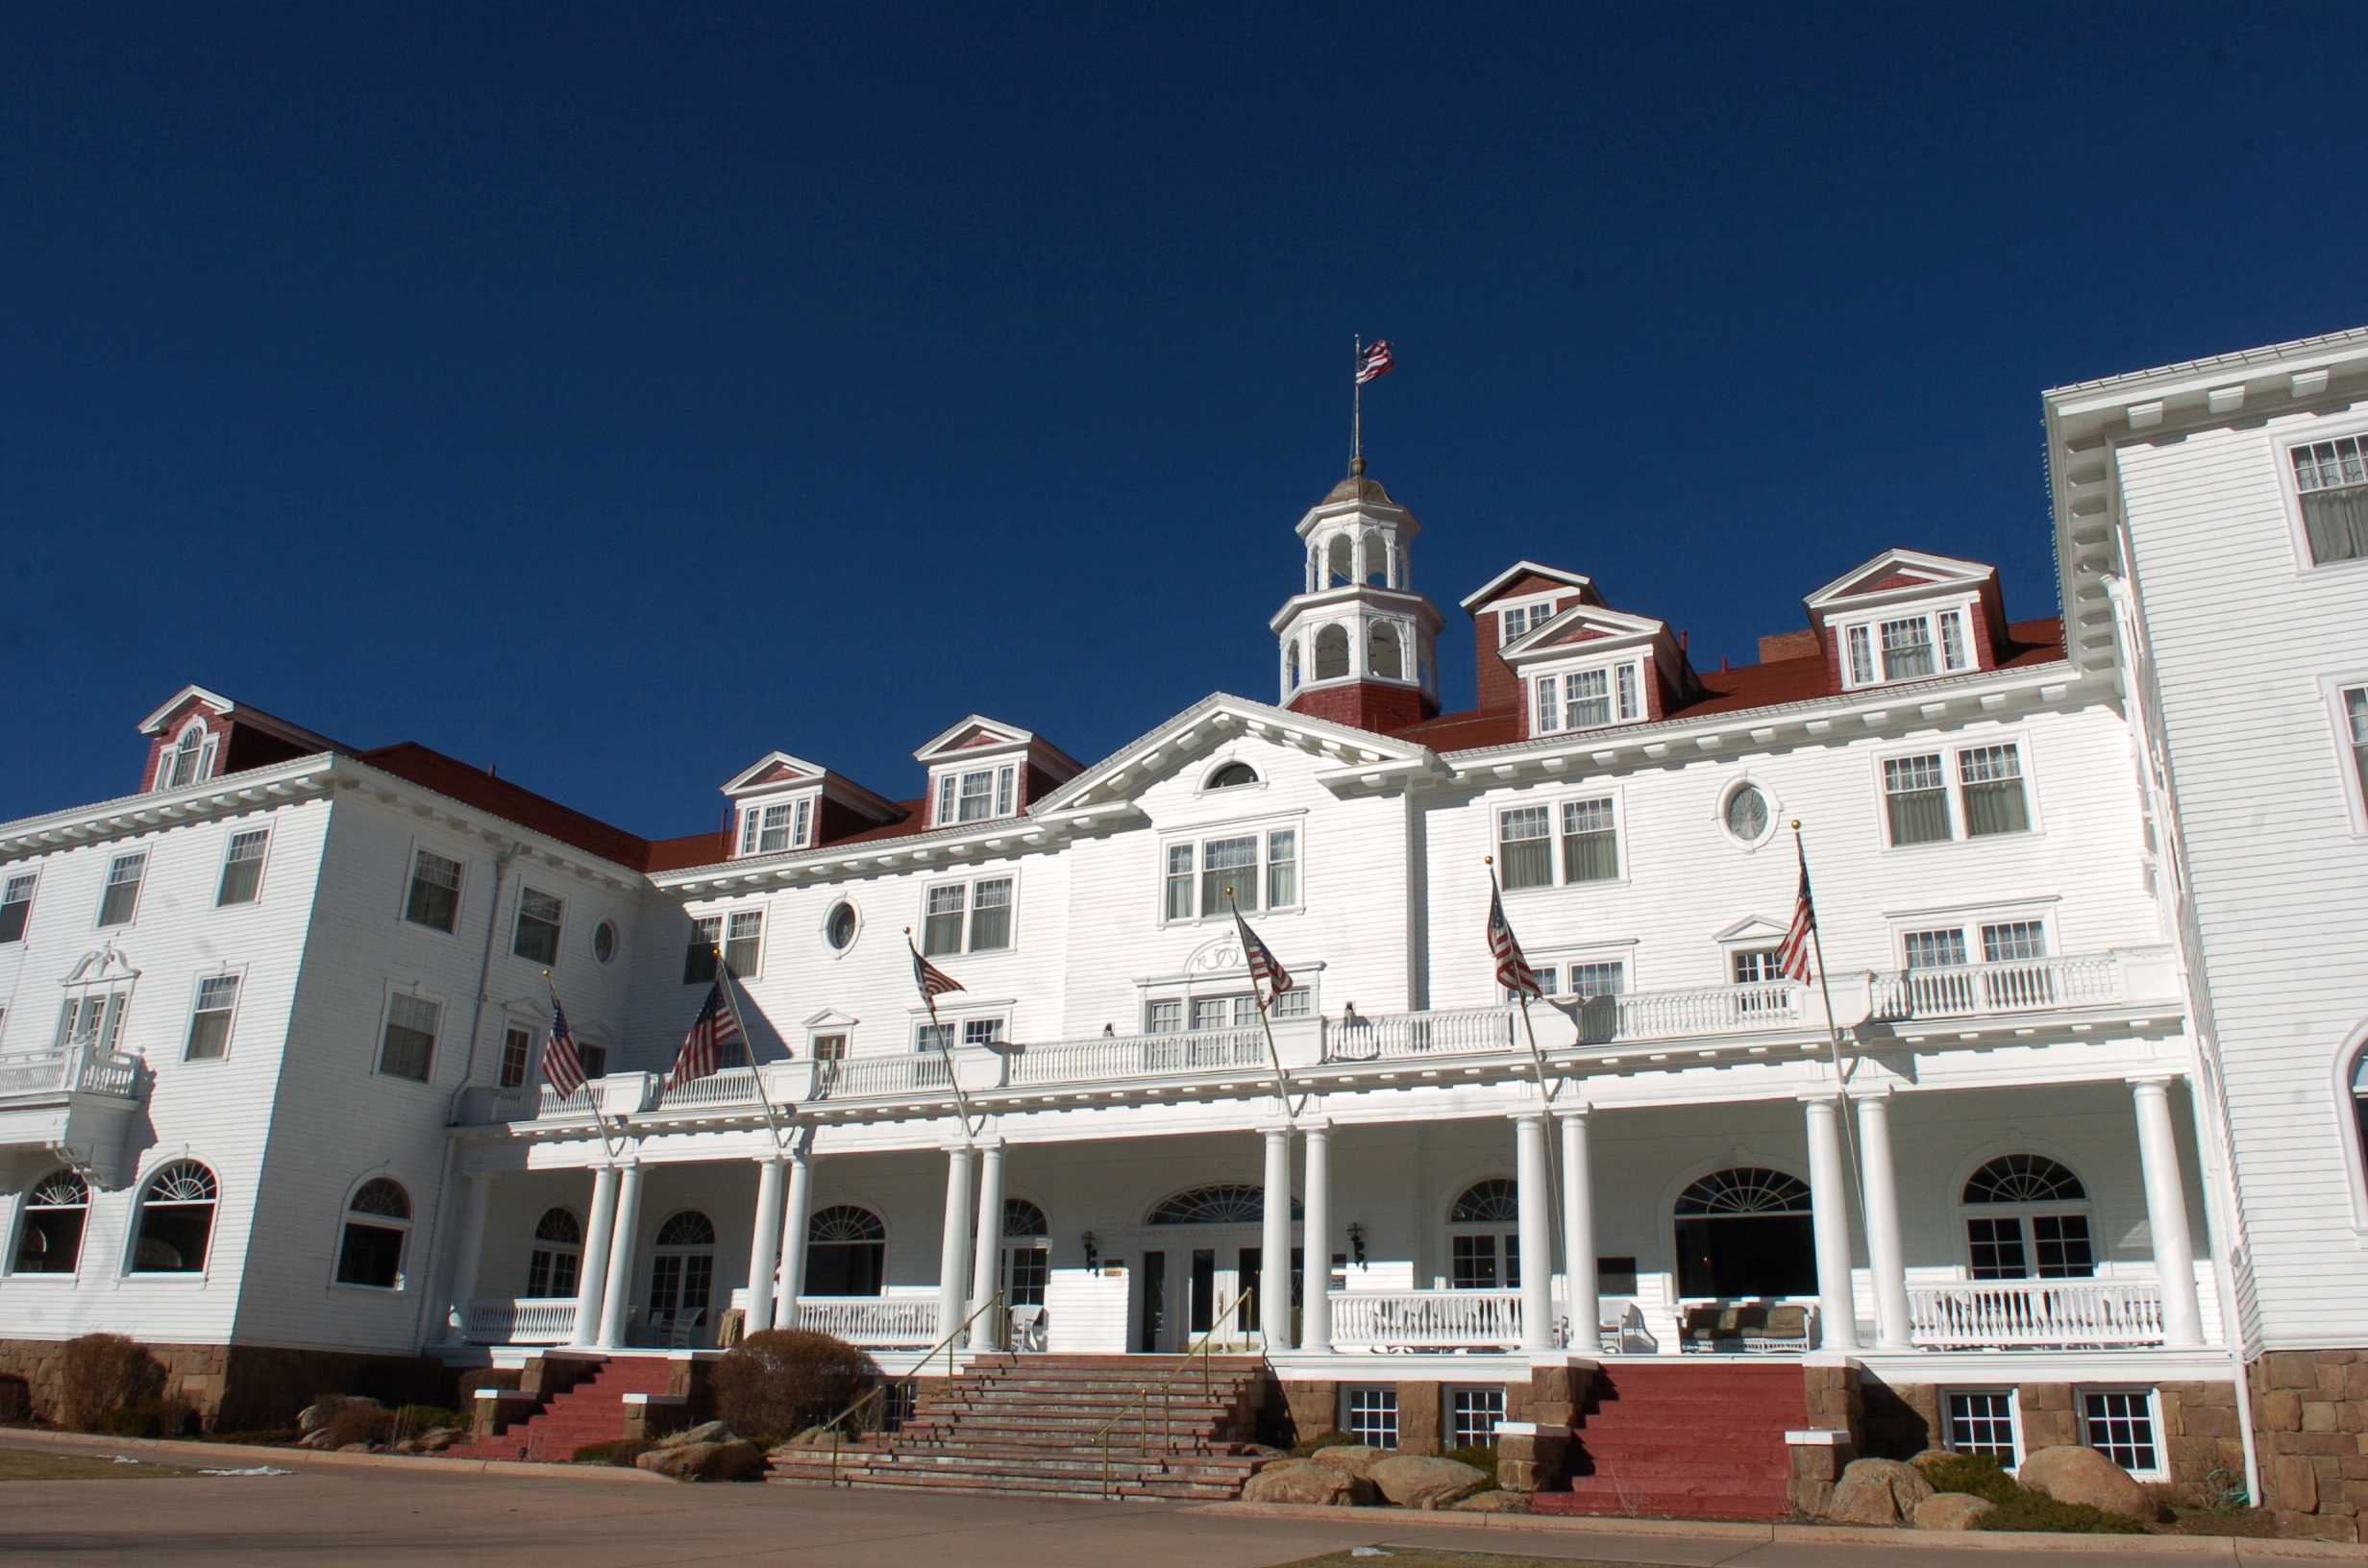 The Stanley Hotel in Estes Park, Colo. (Helen H. Richardson&mdash;Denver Post via Getty Images)